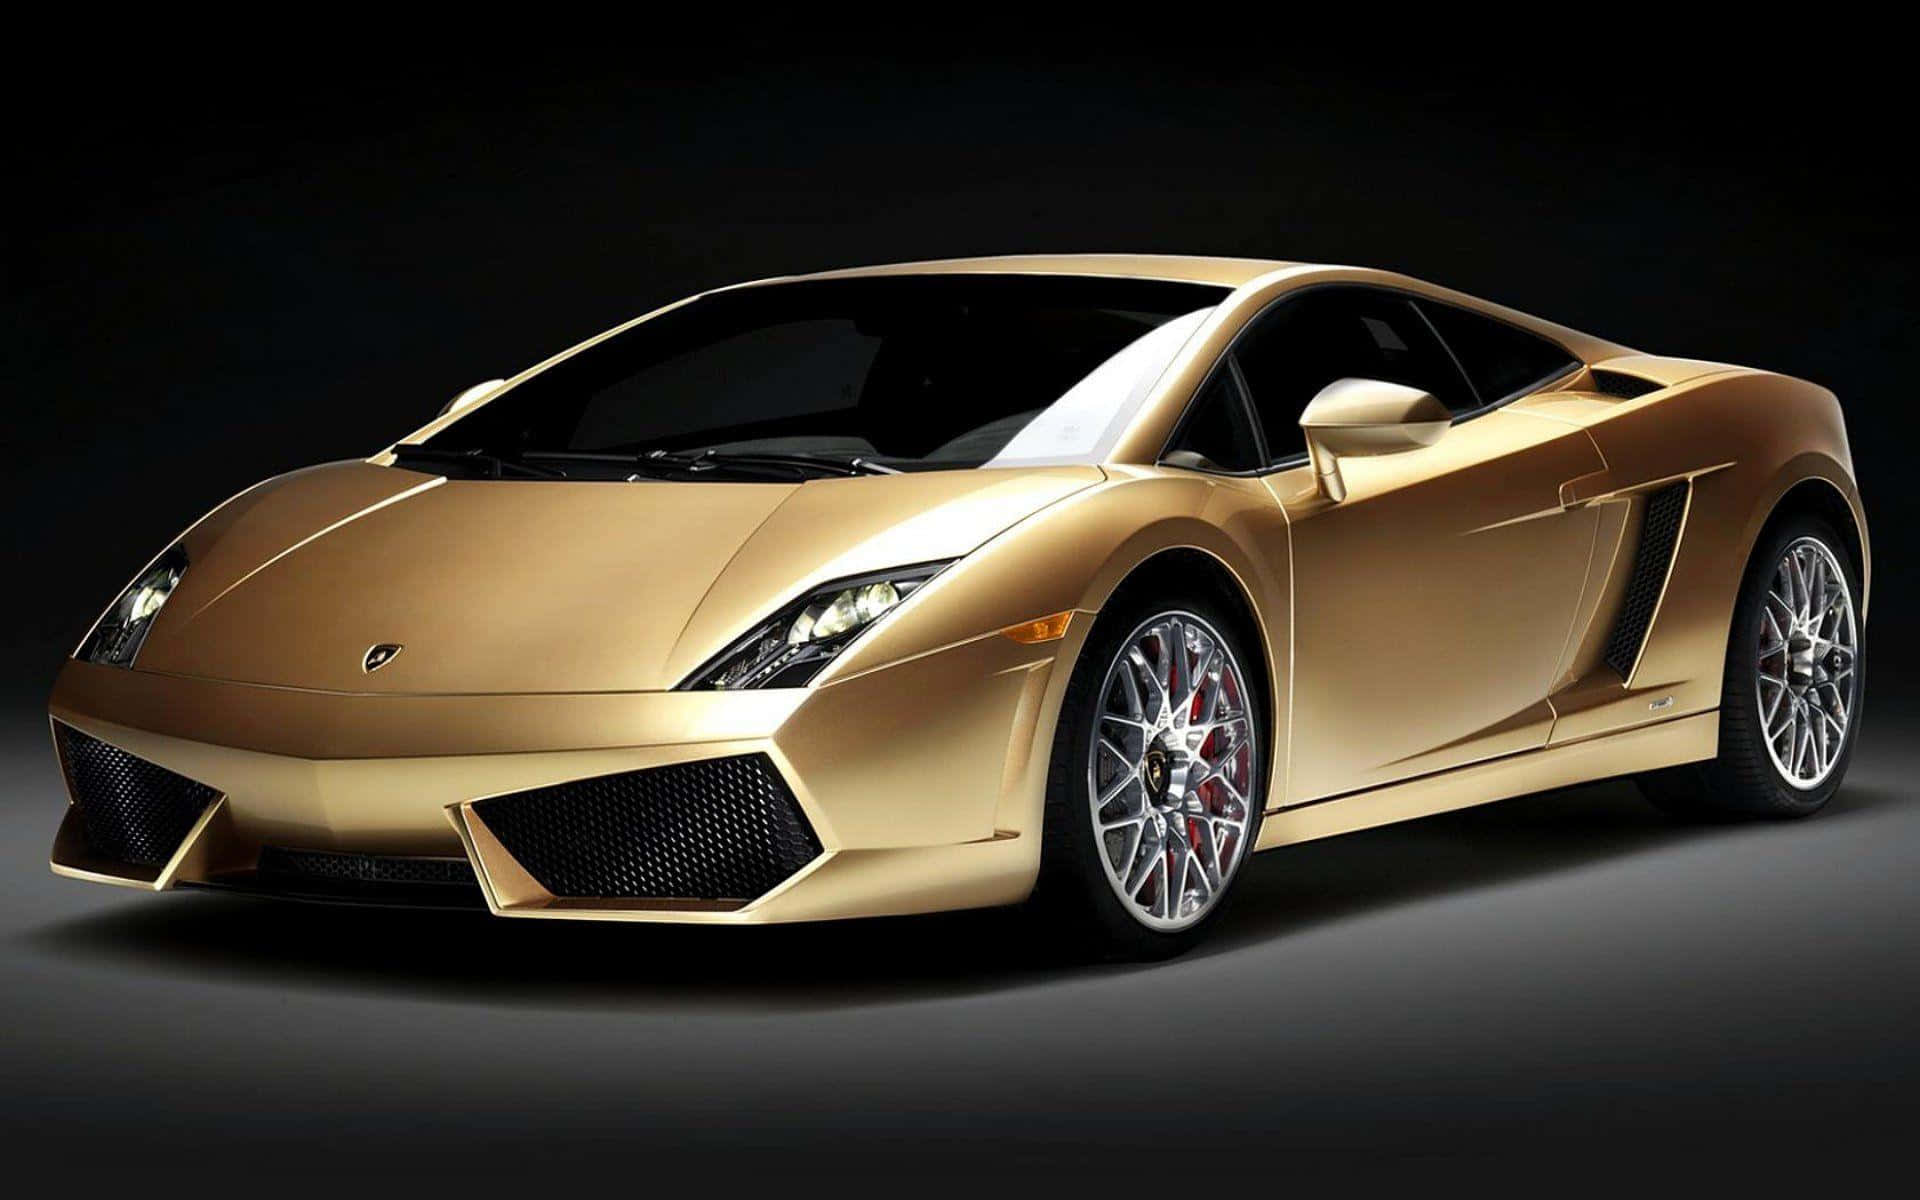 Make a statement with the dazzling gold Lamborghini Wallpaper